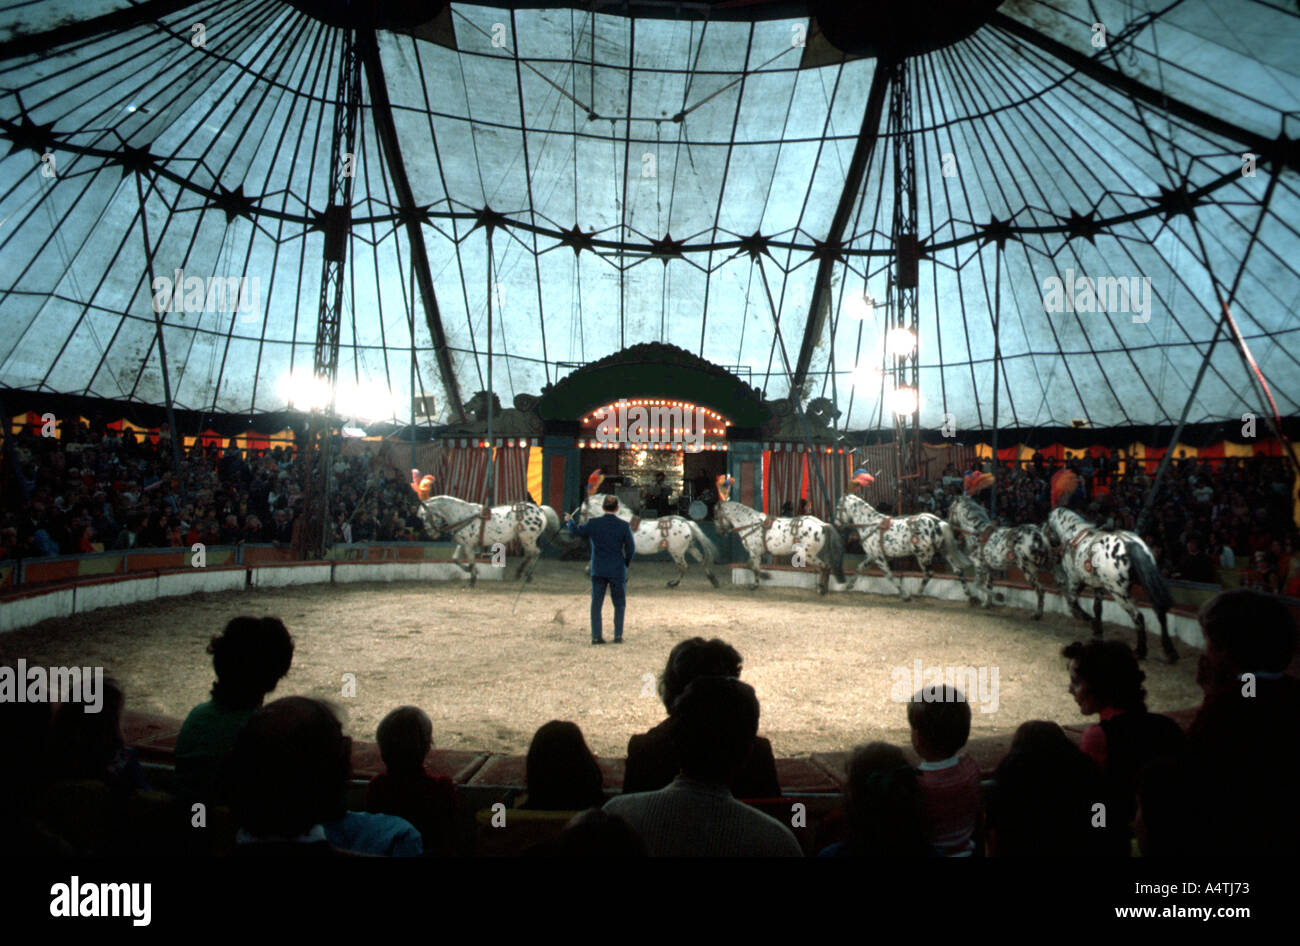 Inside the circus Big Top Stock Photo